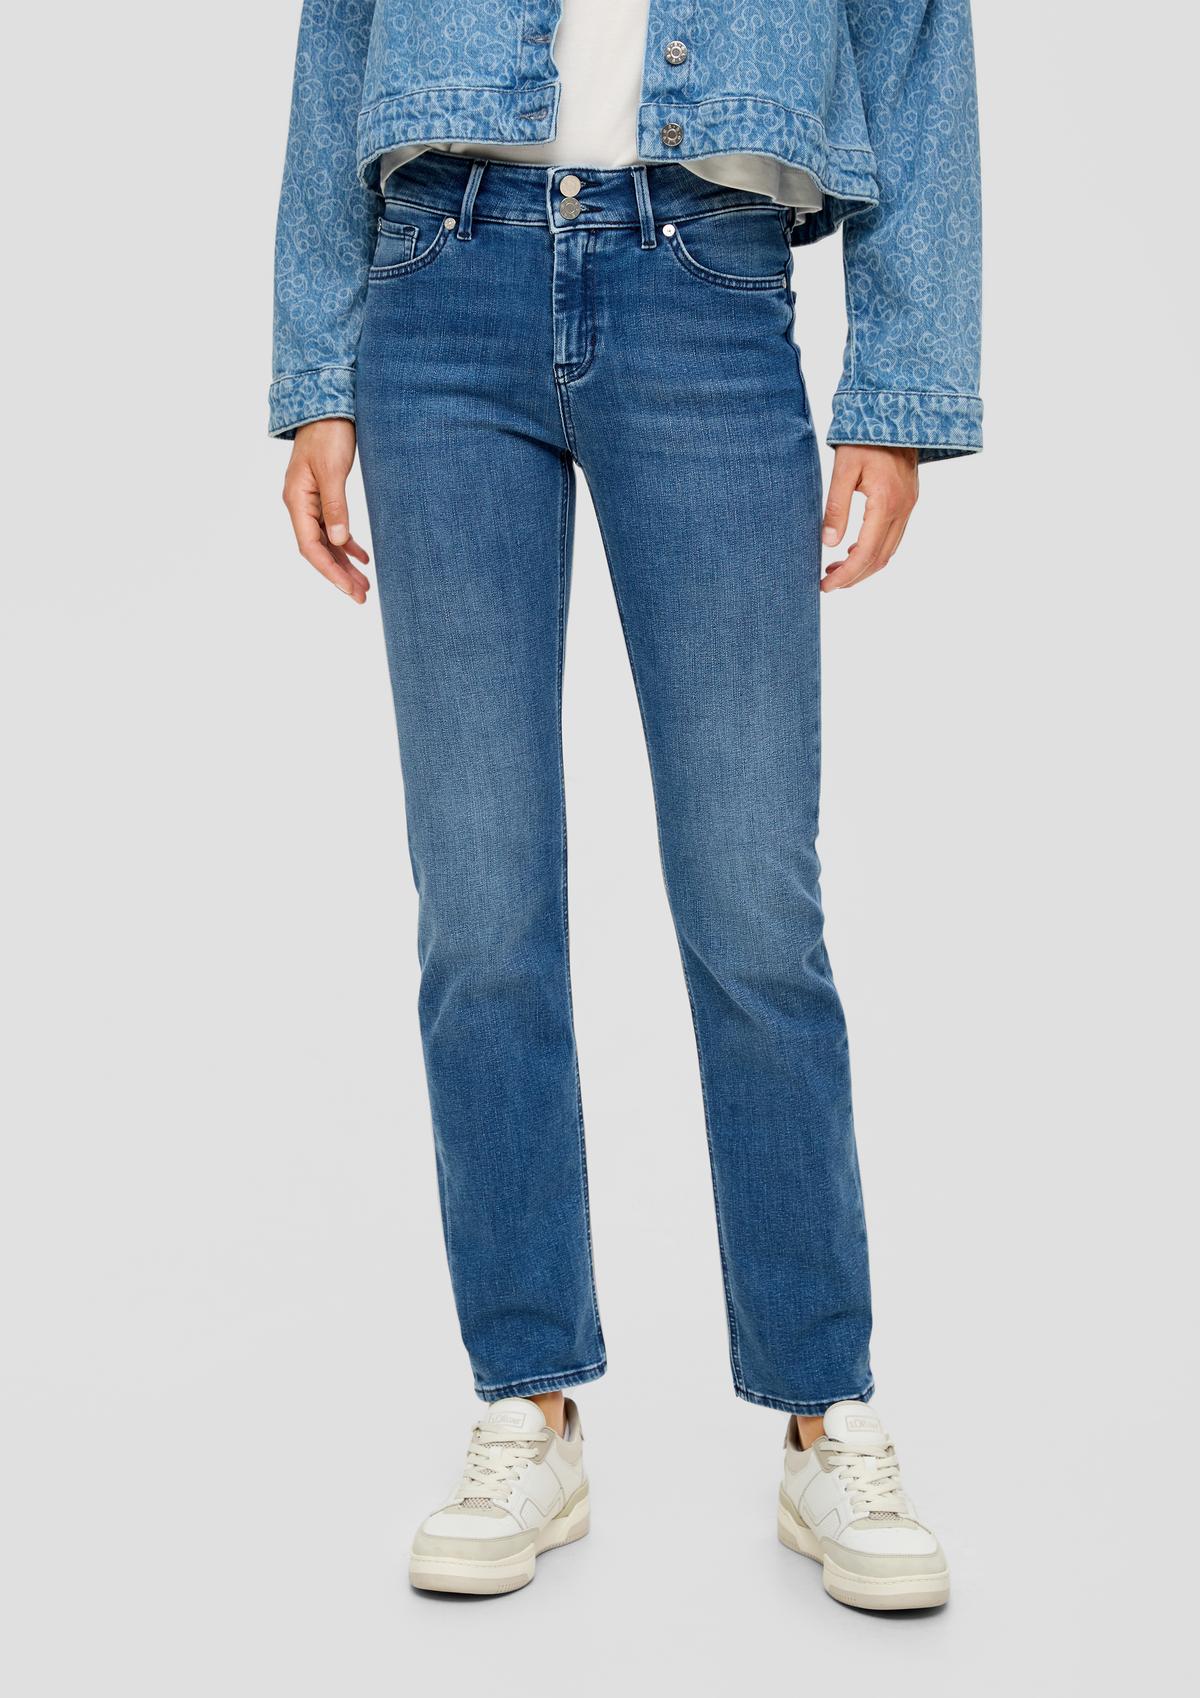 Karolin jeans / Regular Fit / Mid Rise / Straight Leg - blue | s.Oliver